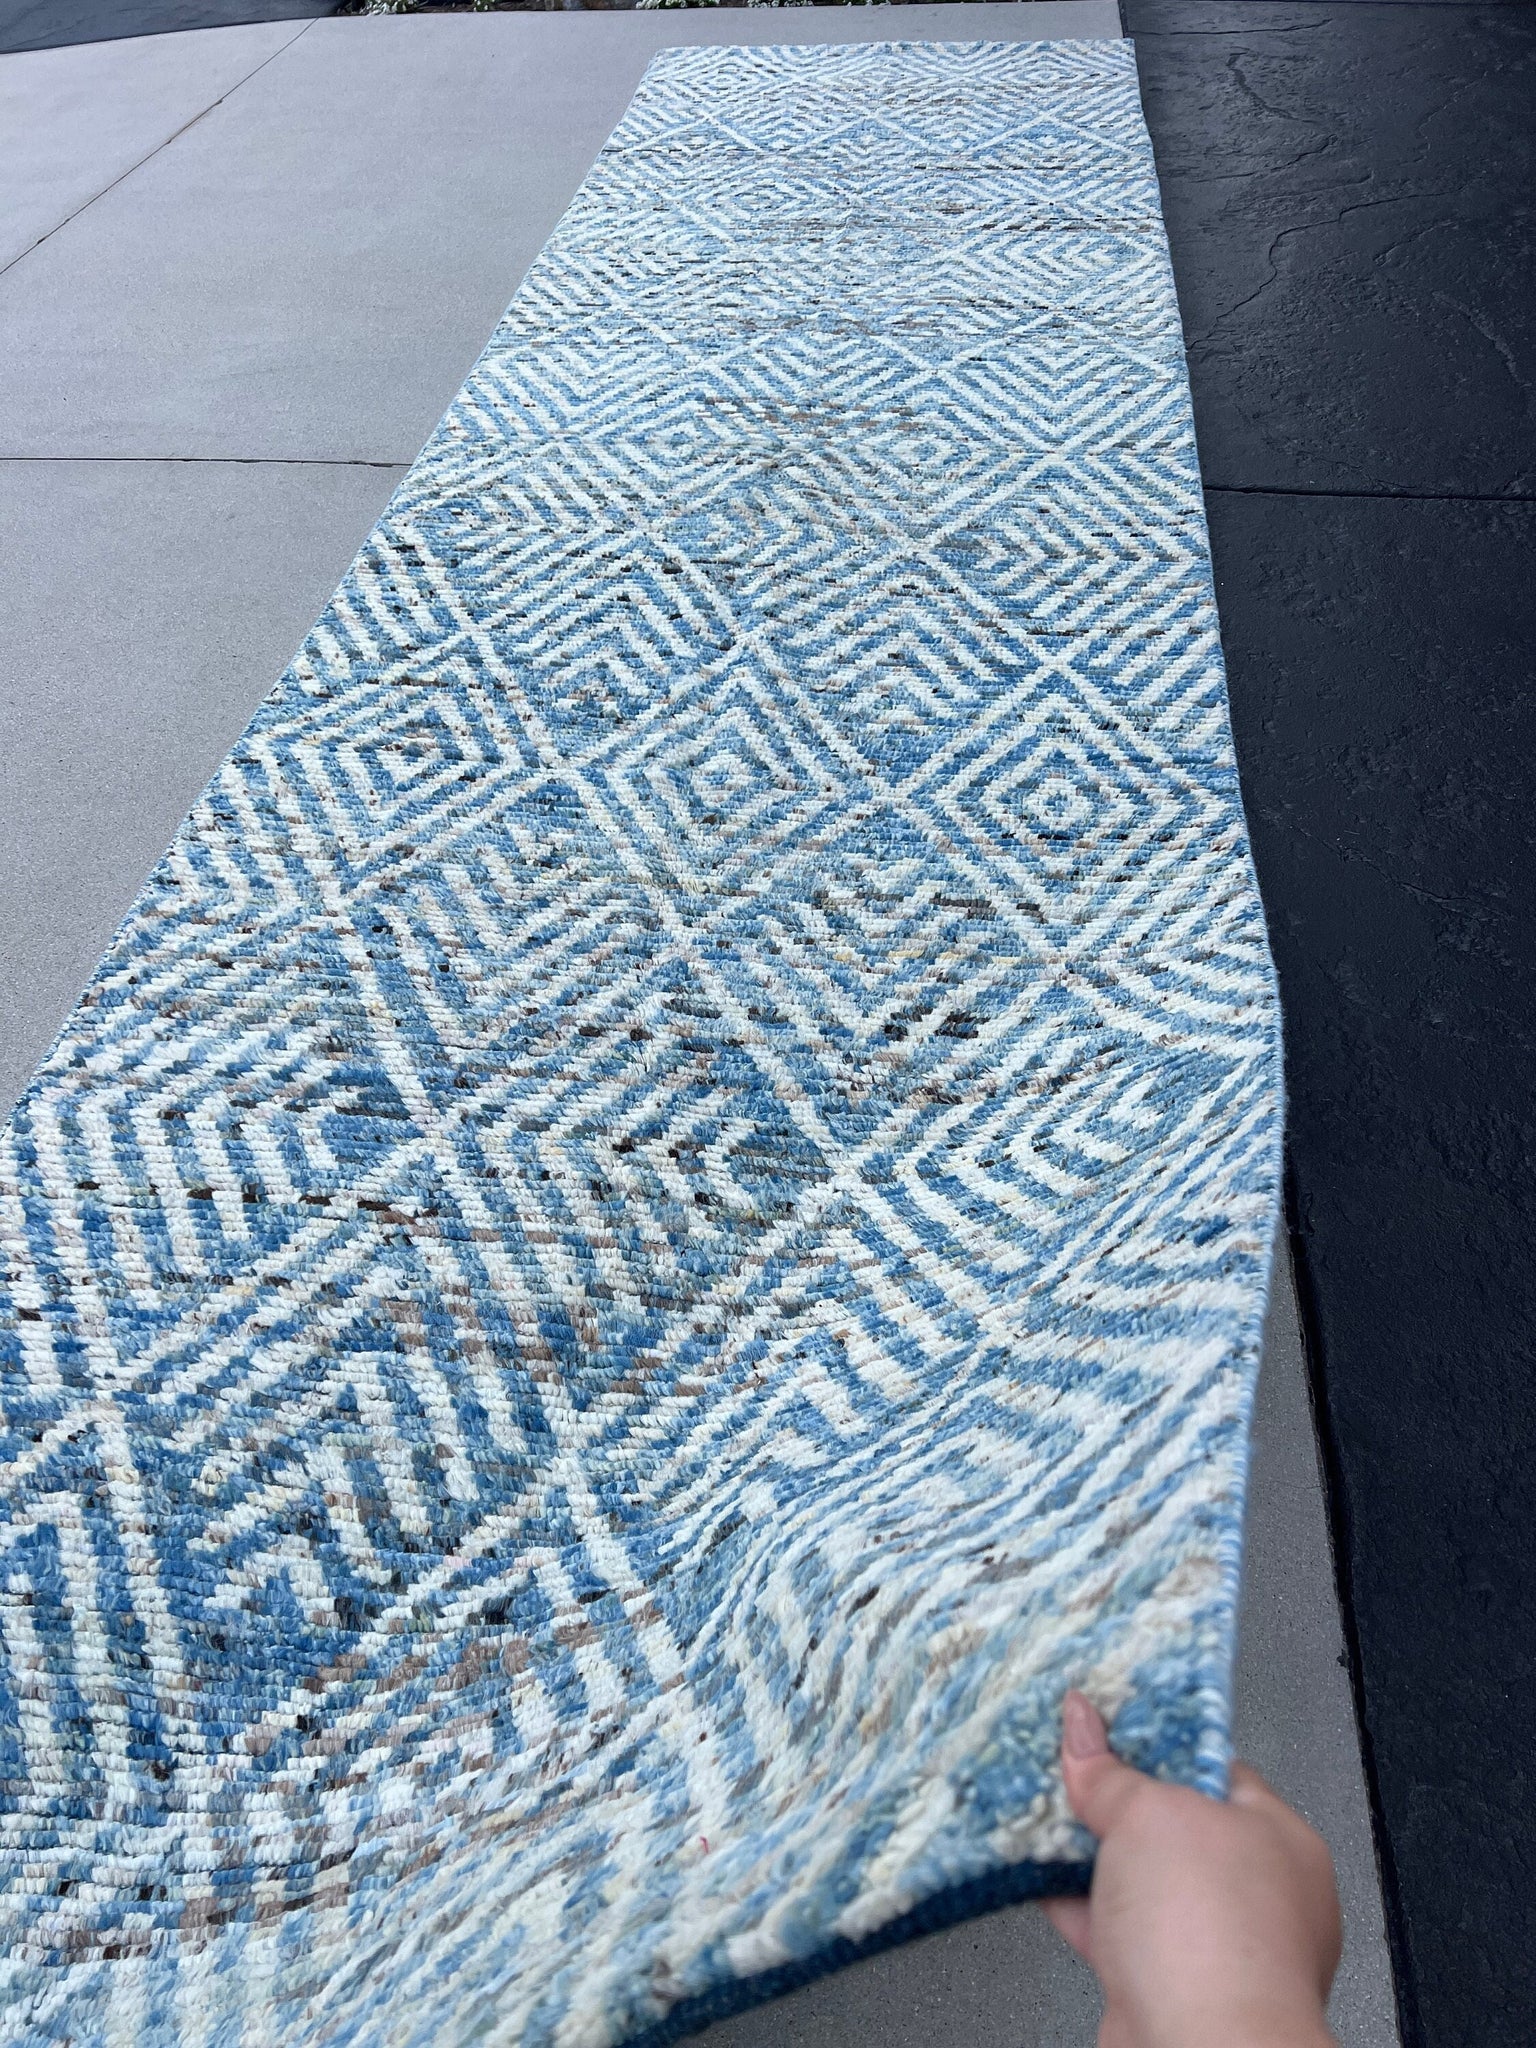 Custom handmade moroccan rug runner - Entryway berber carpet